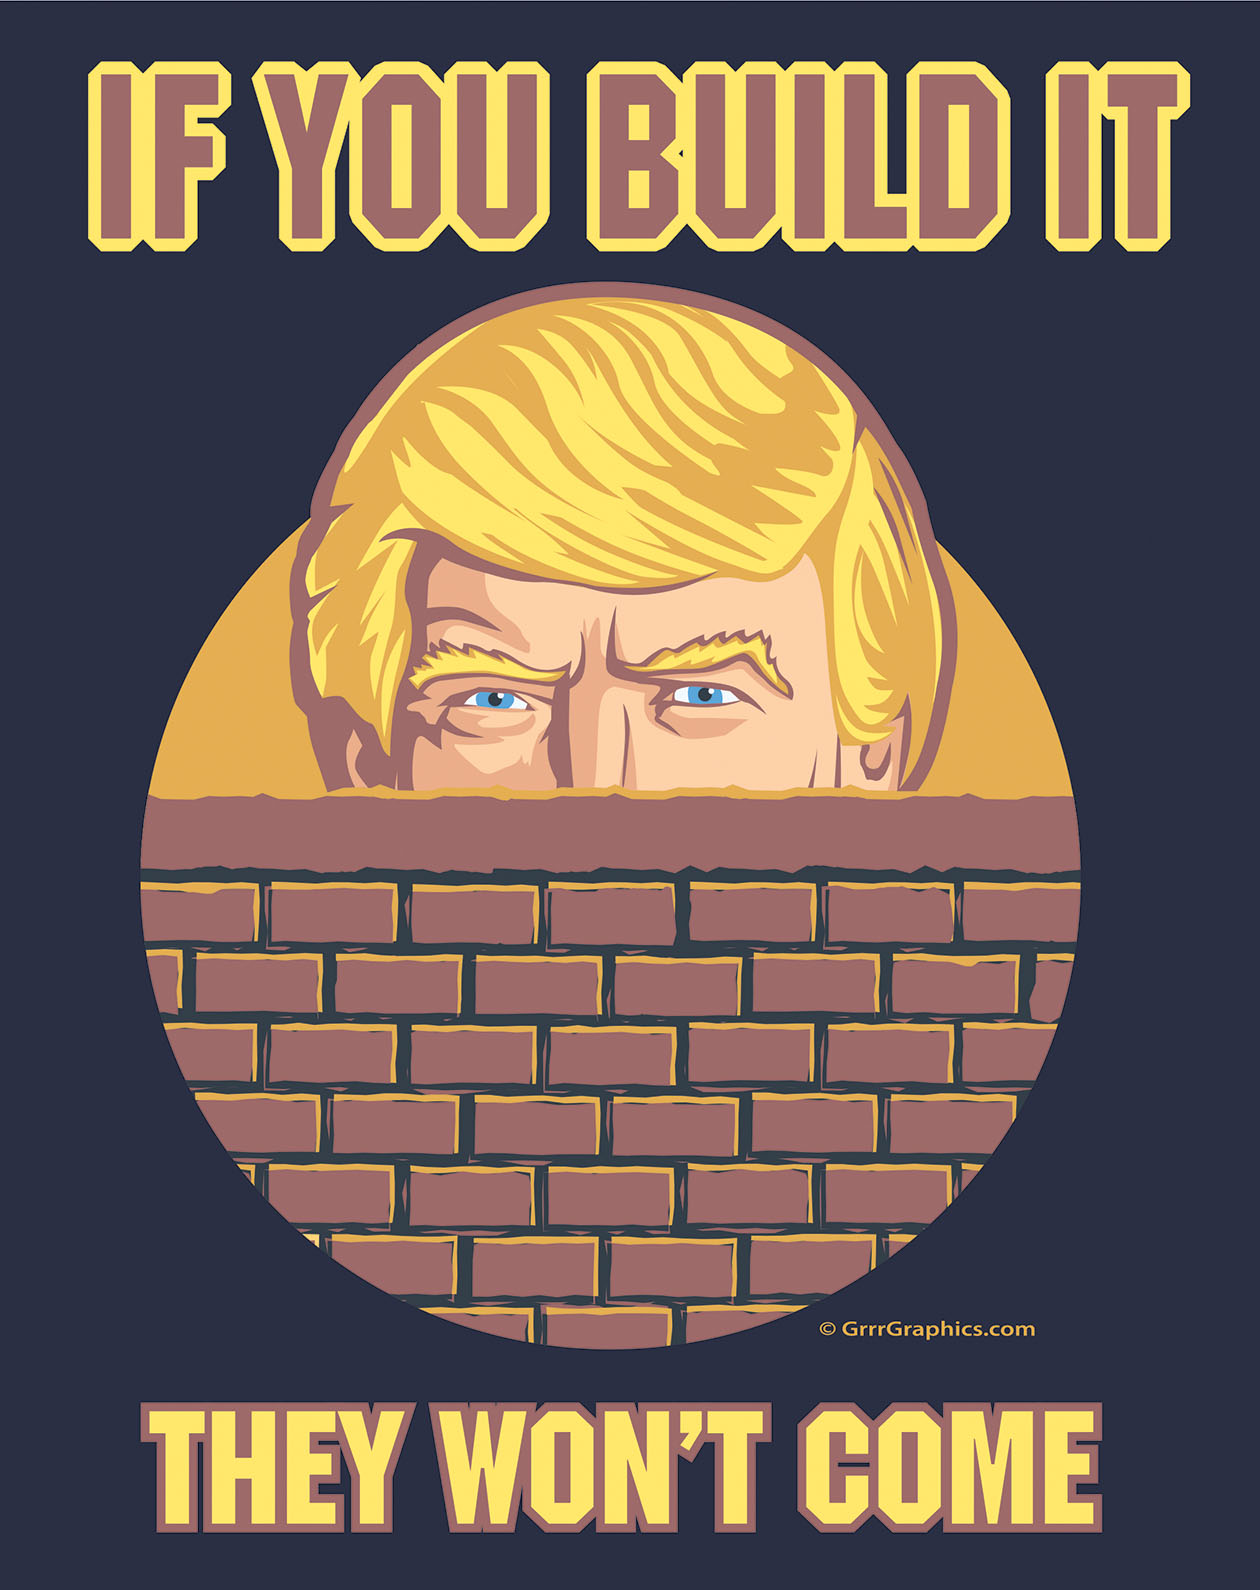 trump_build_wall_t_shirt.jpg